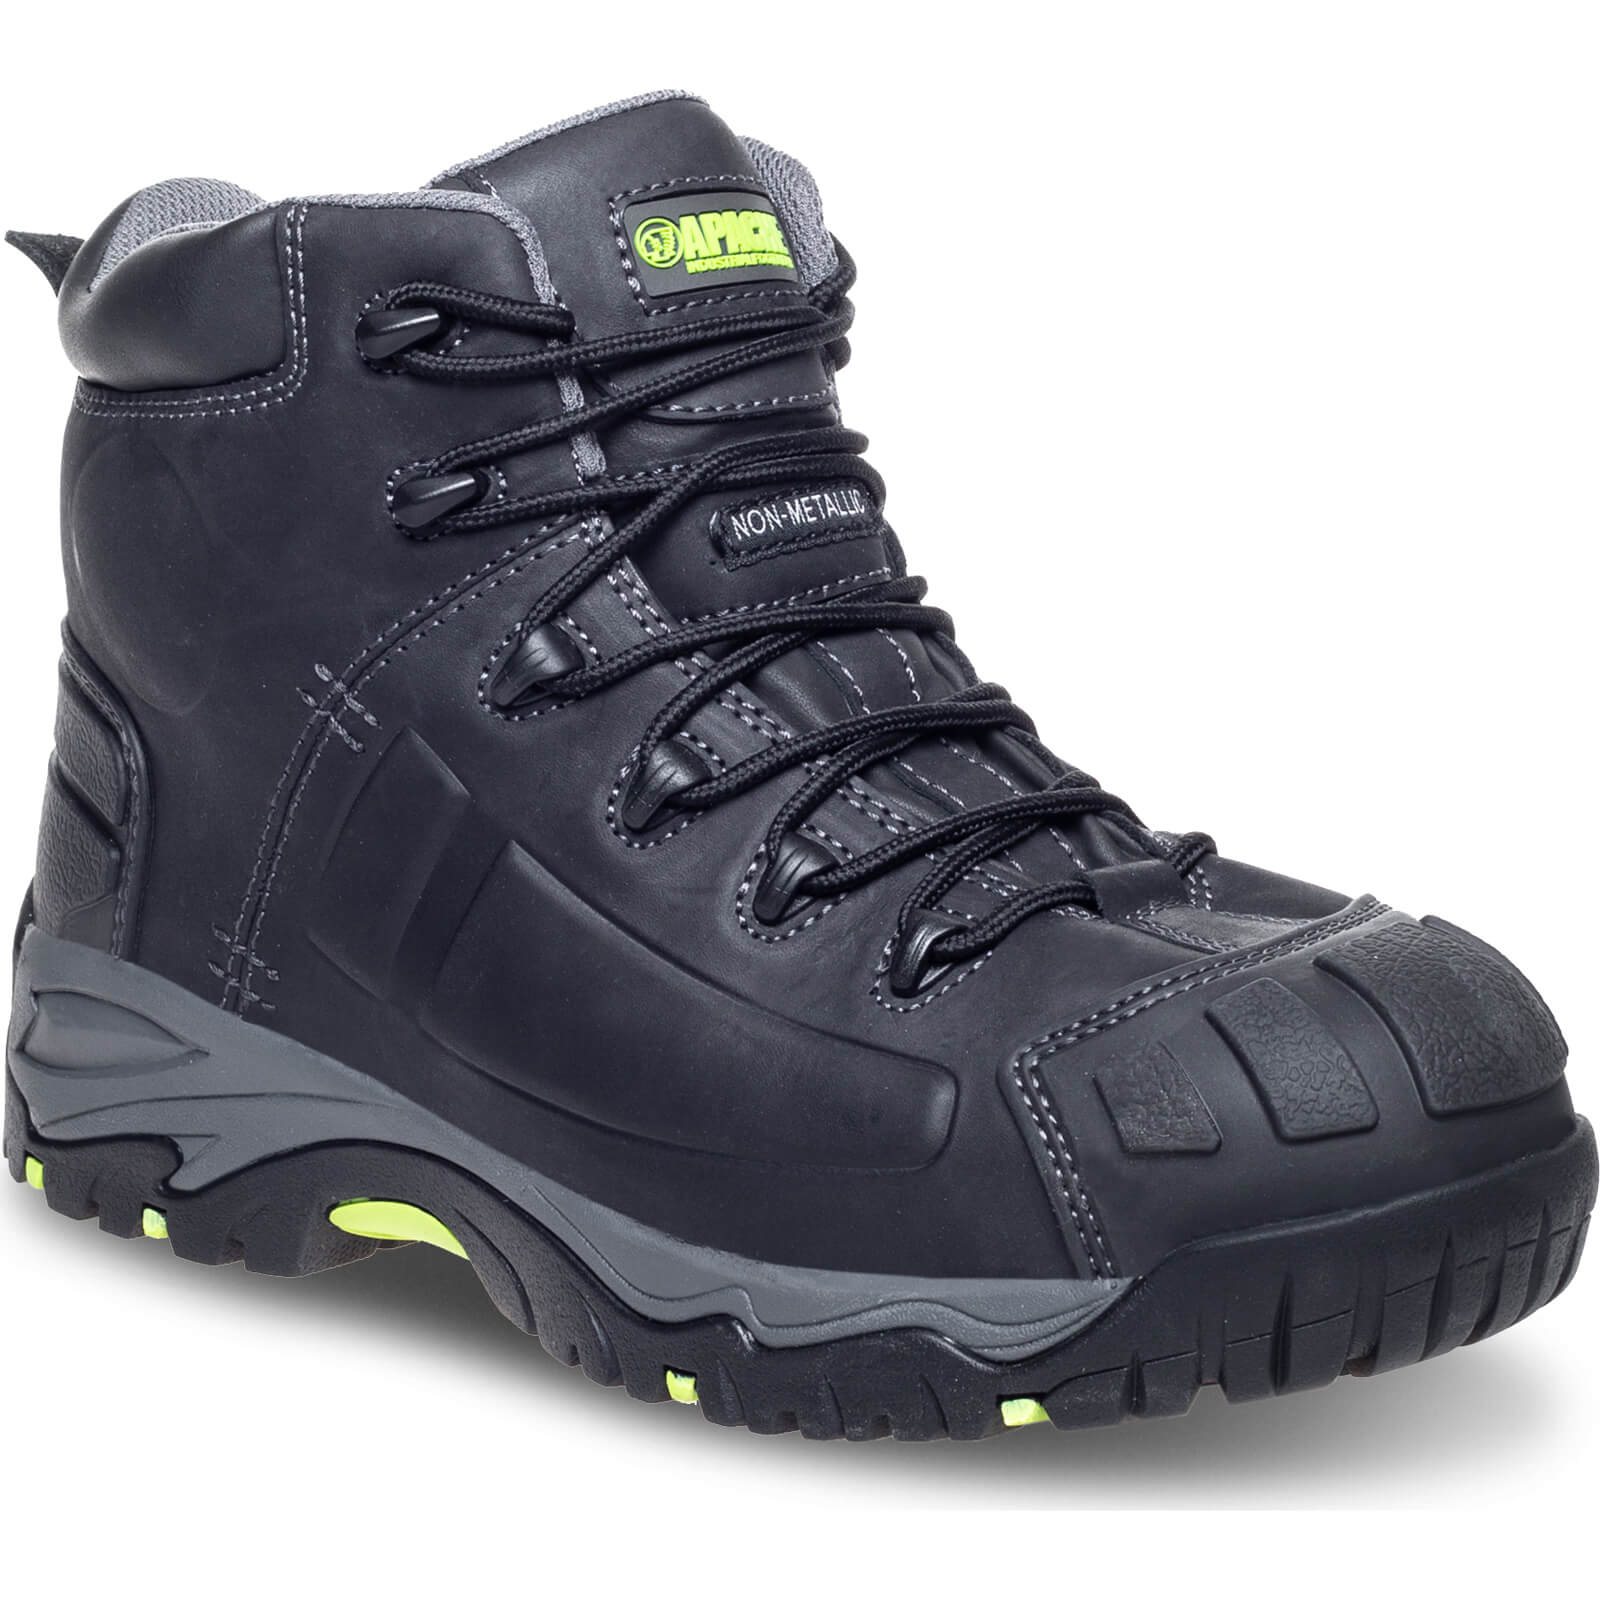 Apache Mercury Non Metallic Waterproof Safety Boots Black Size 10